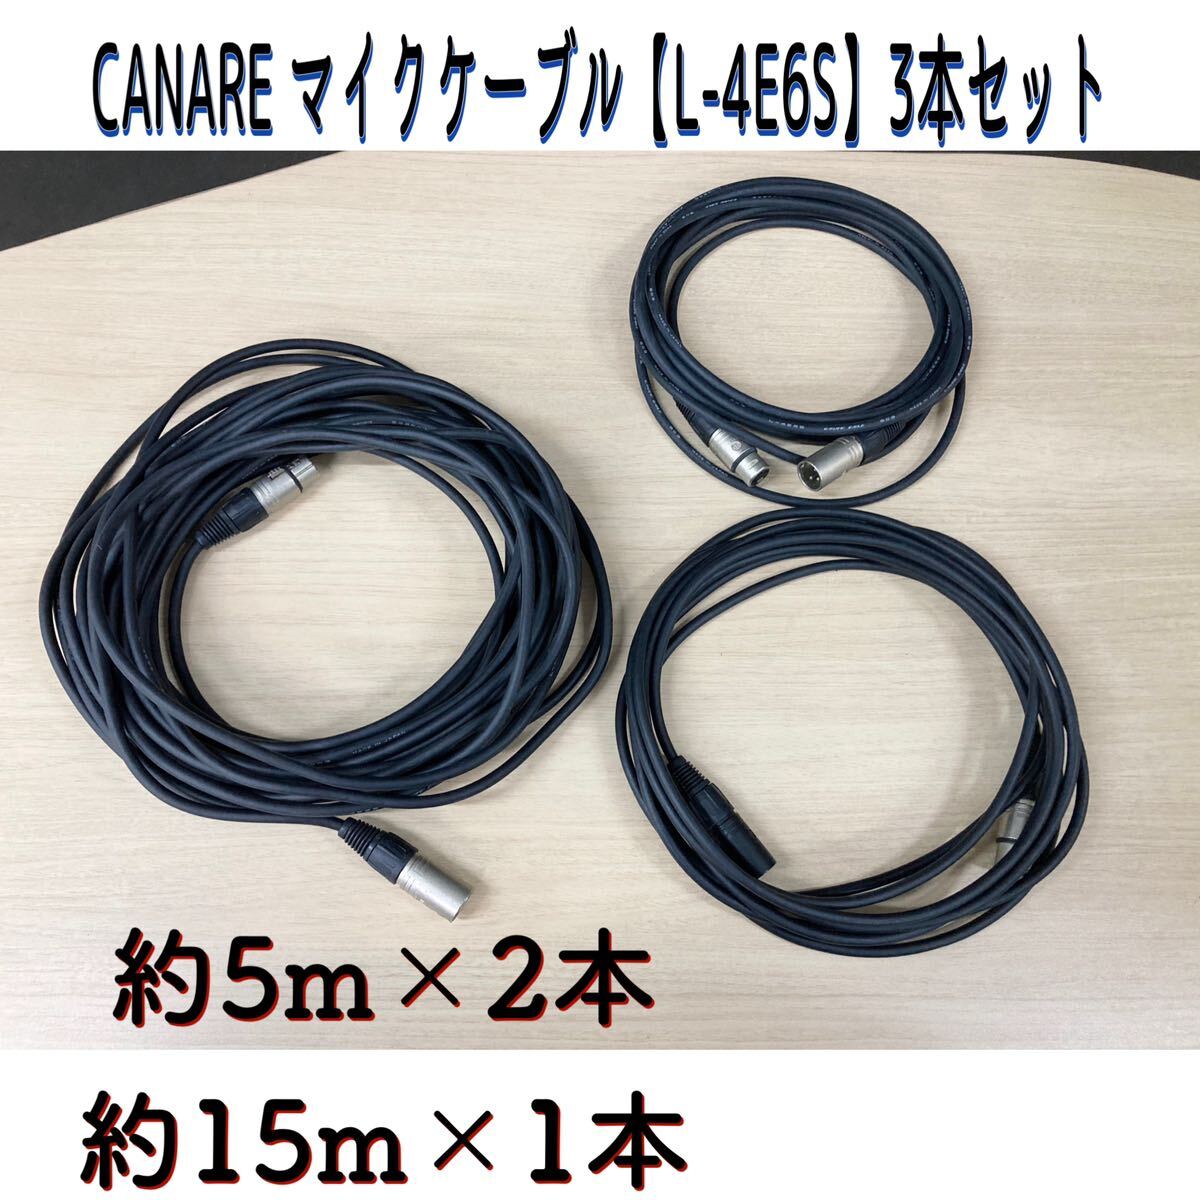 .{33} CANARE микрофонный кабель L-4E6S примерно 5m ×2 шт. комплект примерно 15m× 1 шт. 903 коннектор звук б/у Mike Canare кабель (240307 H-1-6)